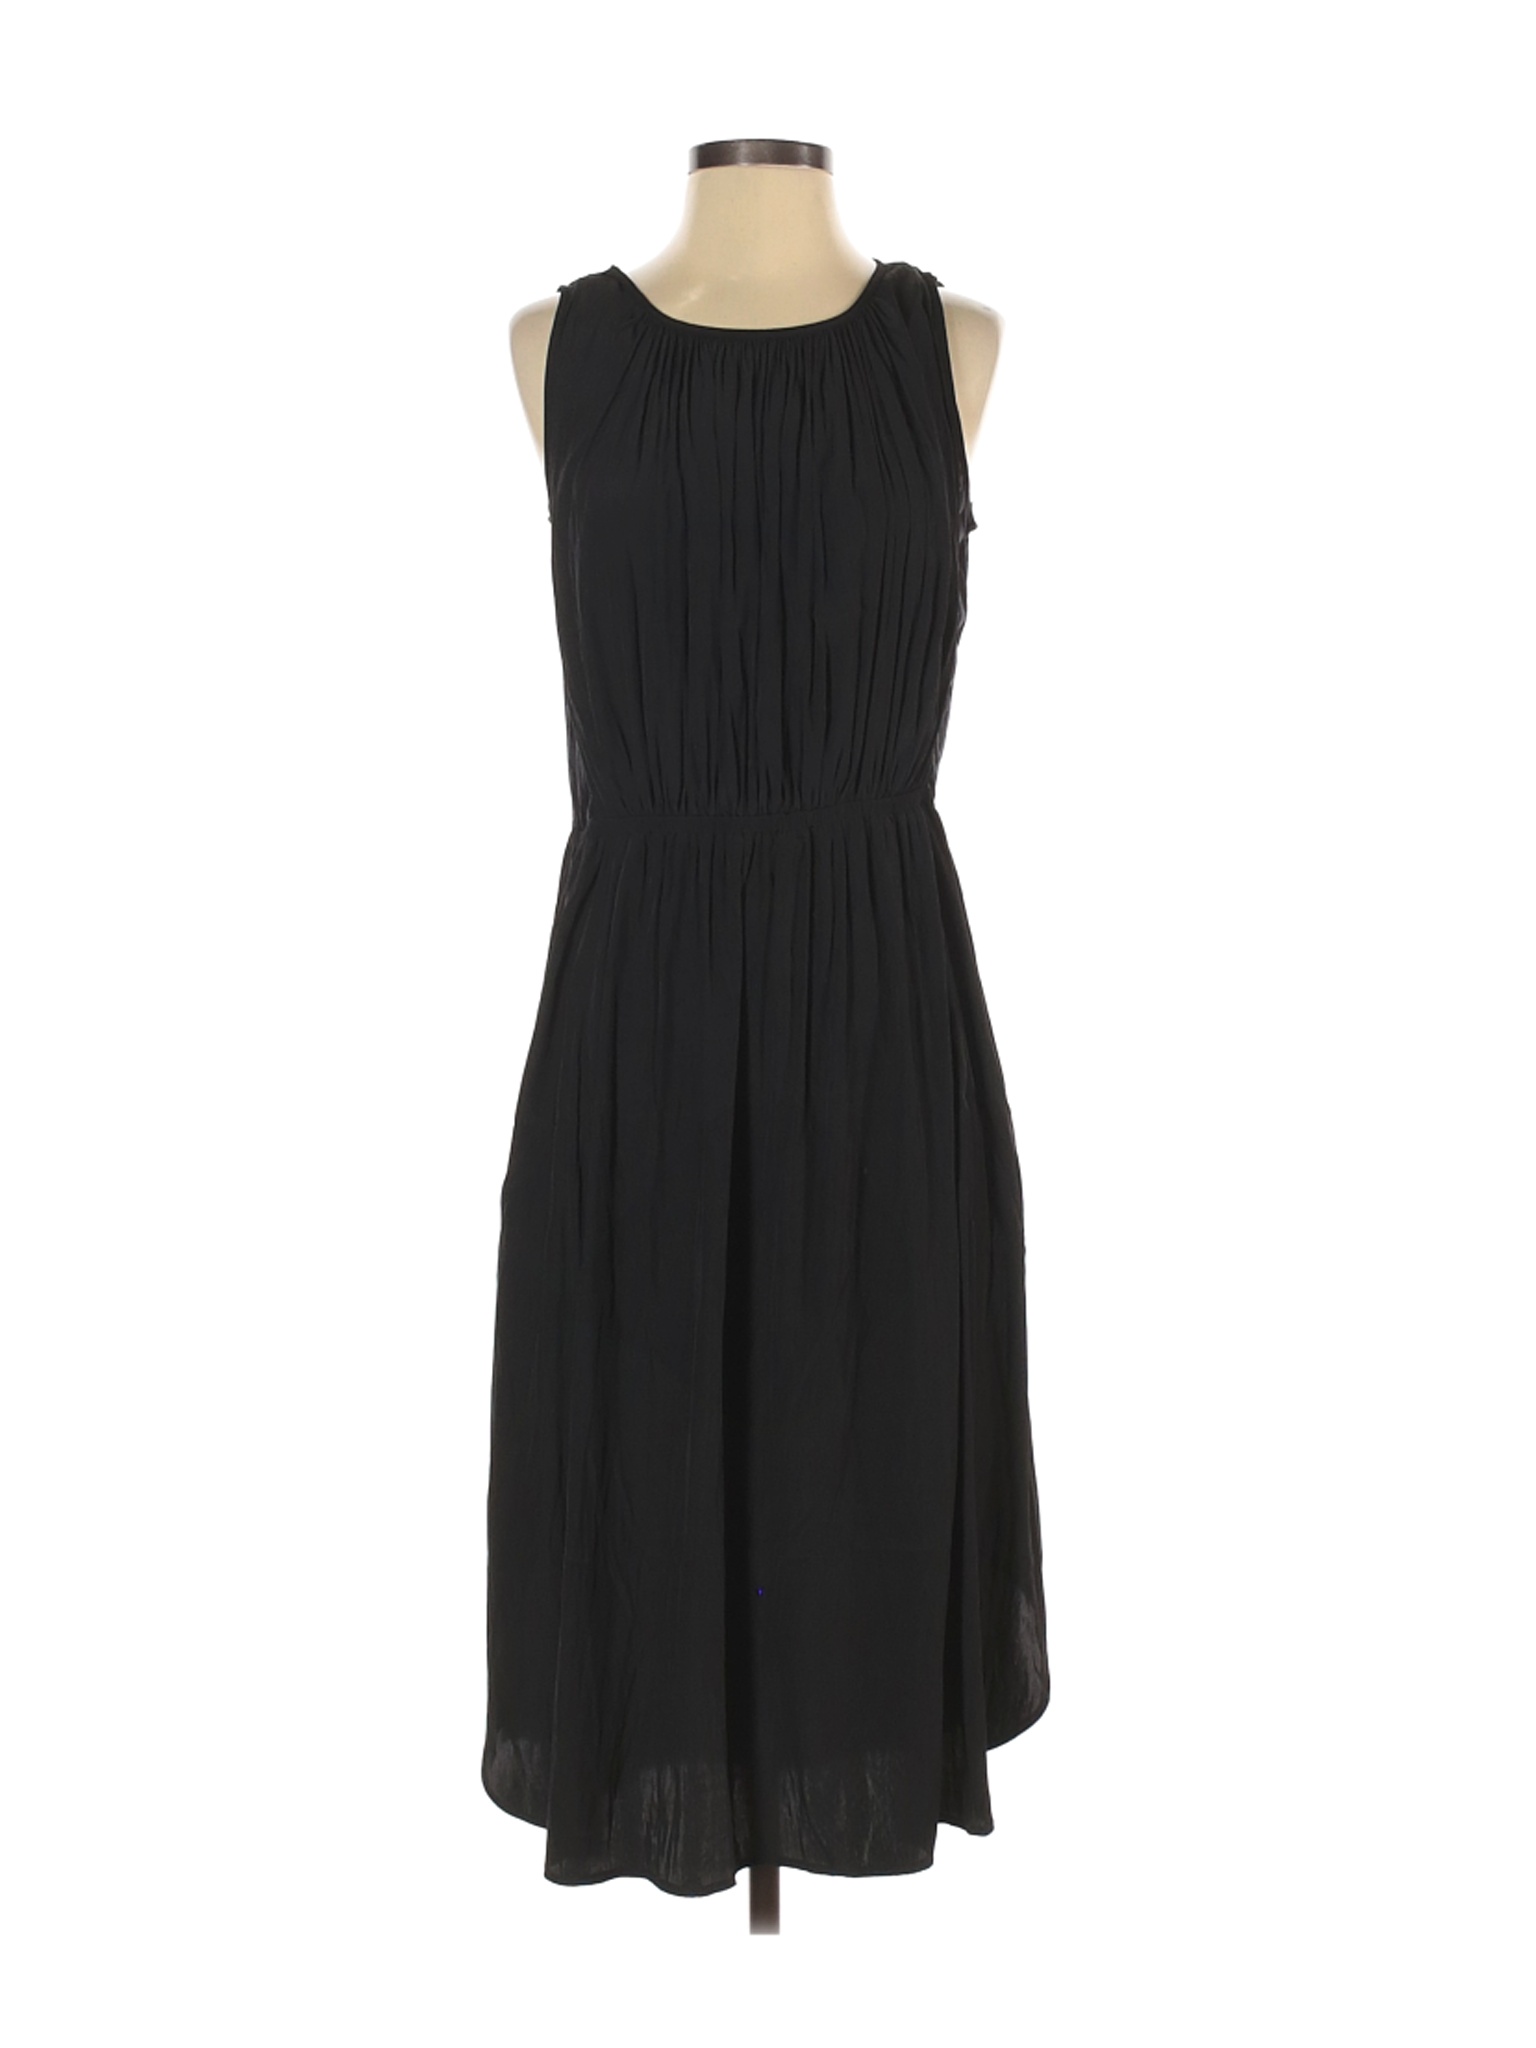 J.Jill Women Black Casual Dress S Petites | eBay